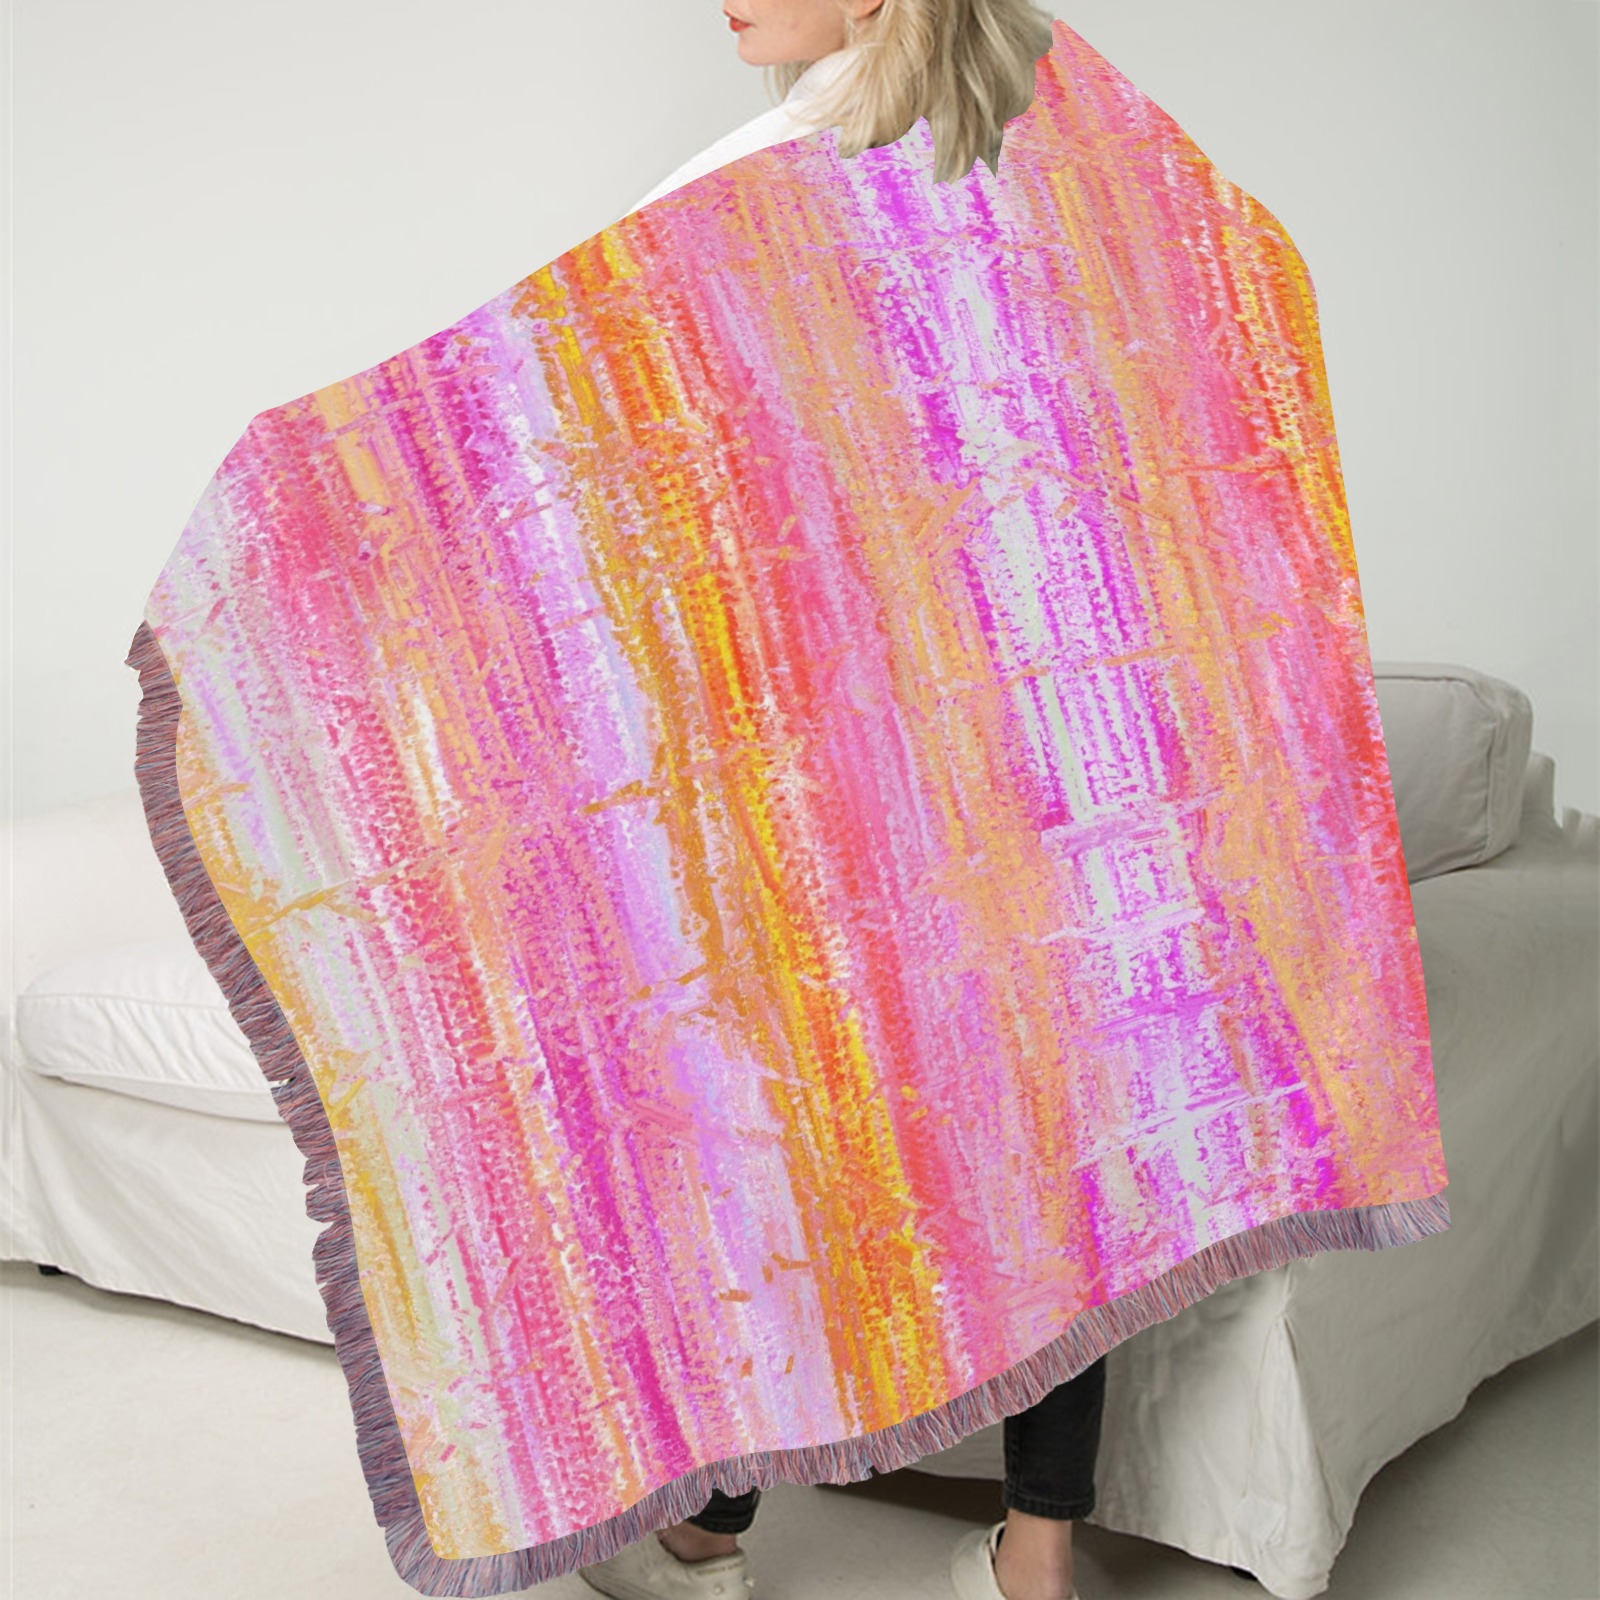 confetti 8 Ultra-Soft Fringe Blanket 40"x50" (Mixed Pink)